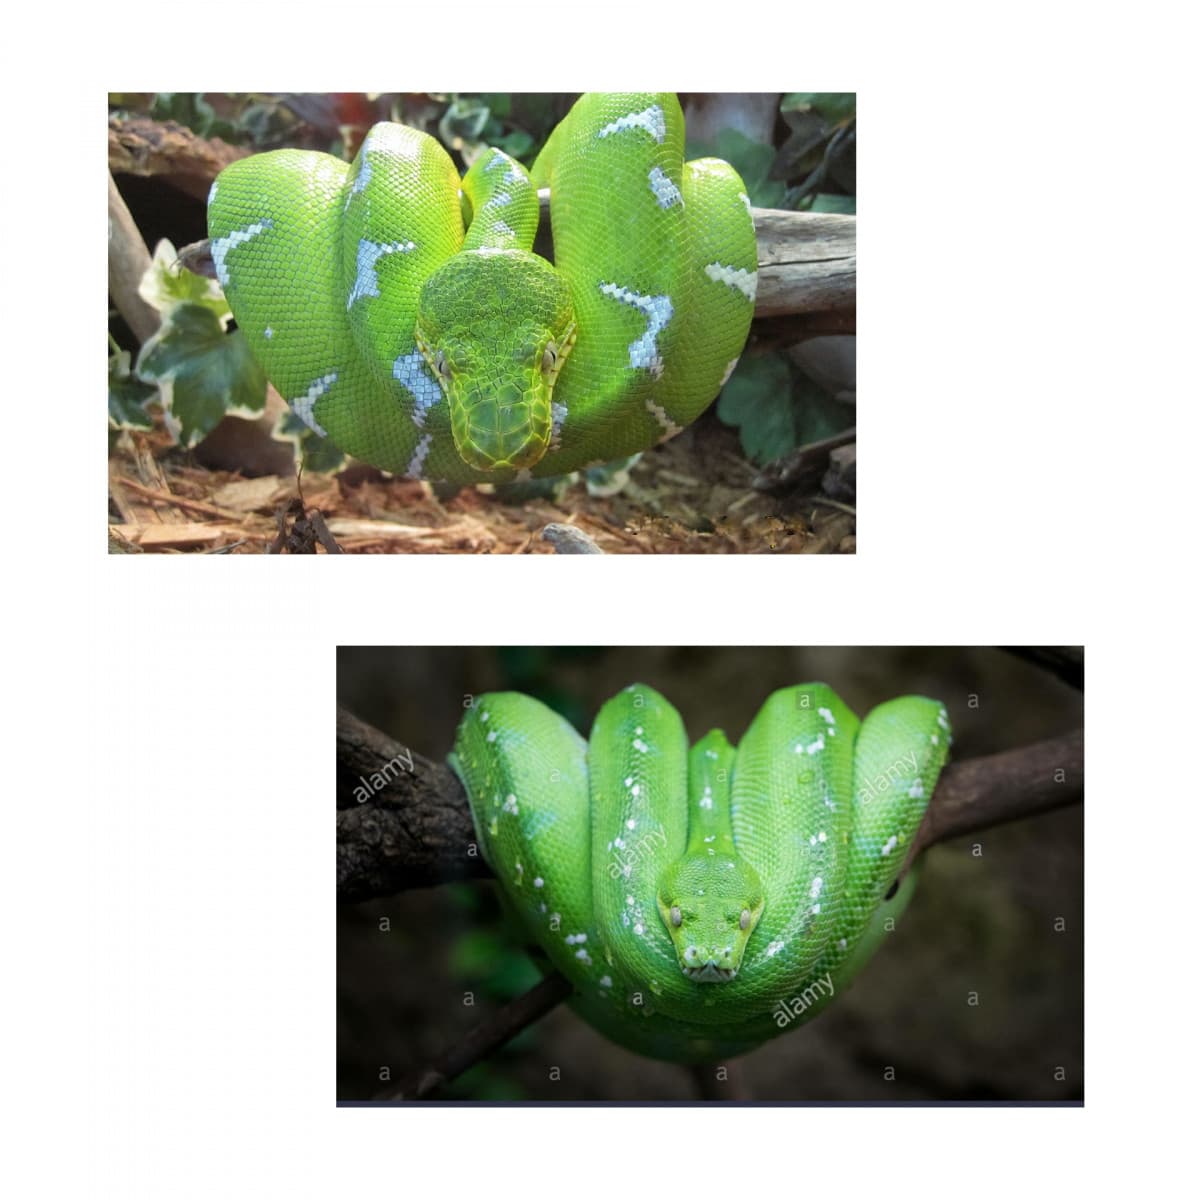 Morelia viridis e Corallus caninus